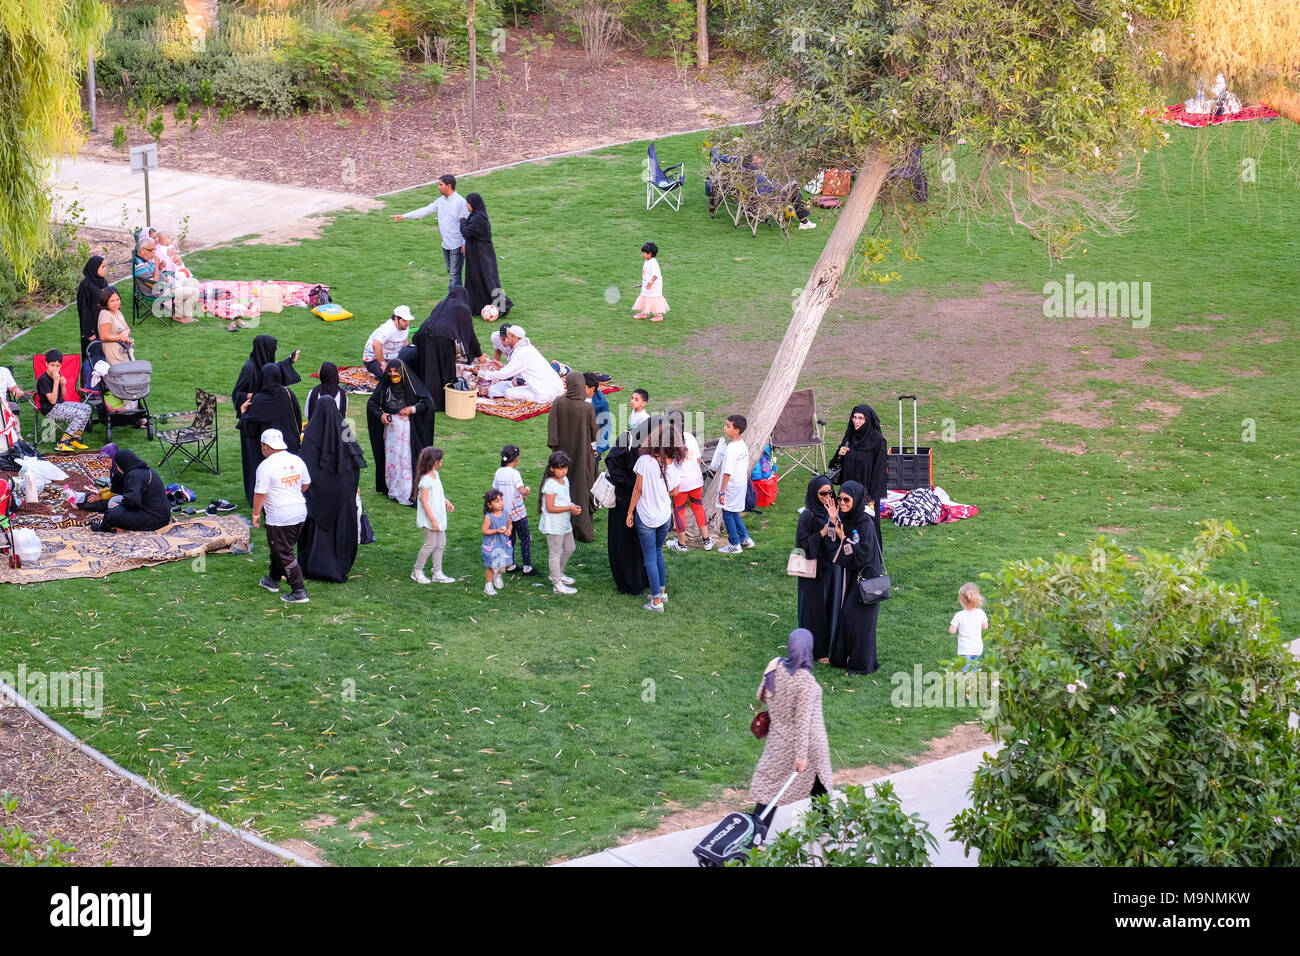 Outdoor Family Picnic , Muslim Arab Families enjoying outdoor Activities at Umm Al Emarat Park, Abu Dhabi, UAE. Stock Photo